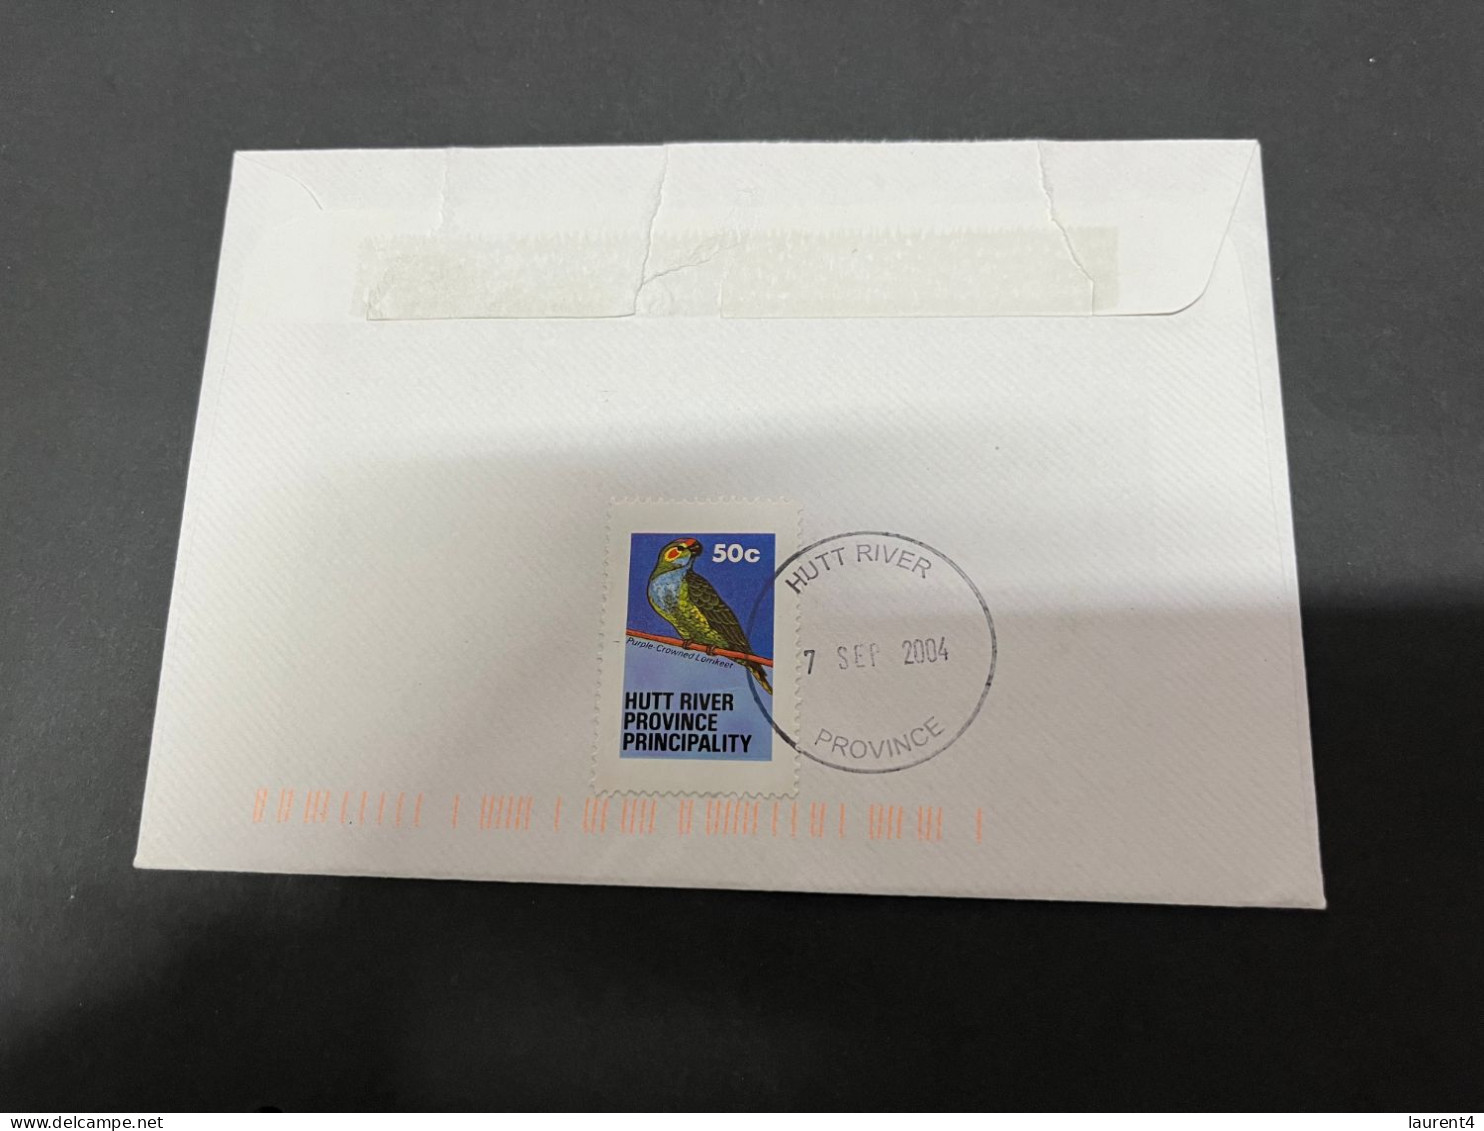 20-7-2023 (2 S 44) Australia Cover + Postcard + Blank Cover Large 18 X 27 Cm) - Hutt River Province (WA) 3 Items - Werbemarken, Vignetten